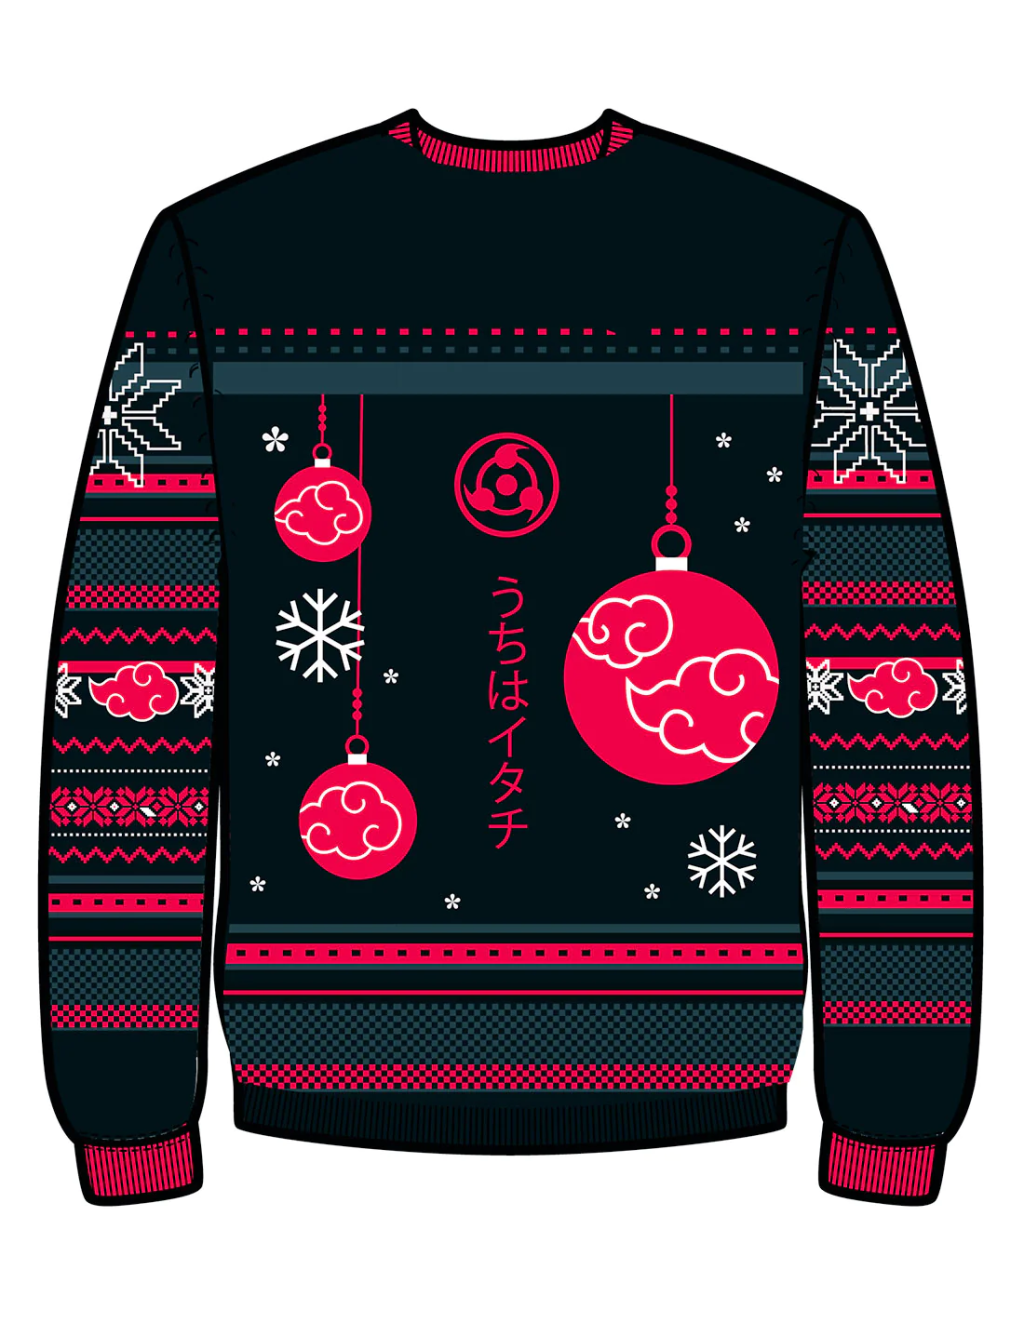 NARUTO - Itachi - Men Christmas Sweaters (XS)